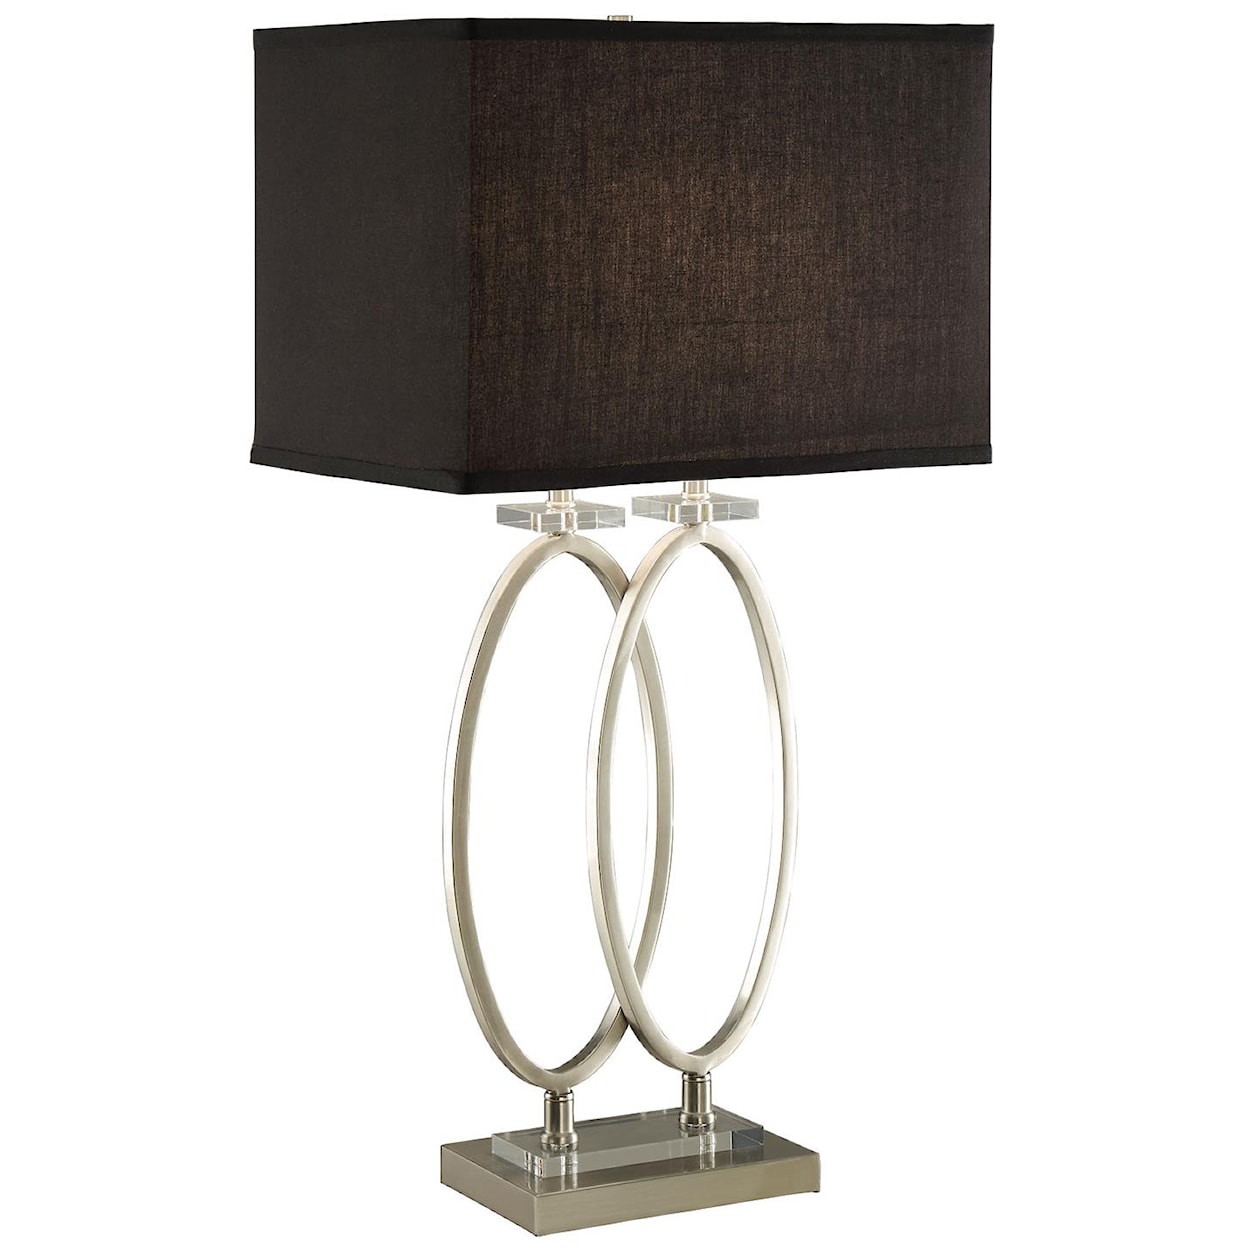 Michael Alan CSR Select Table Lamps Lamp